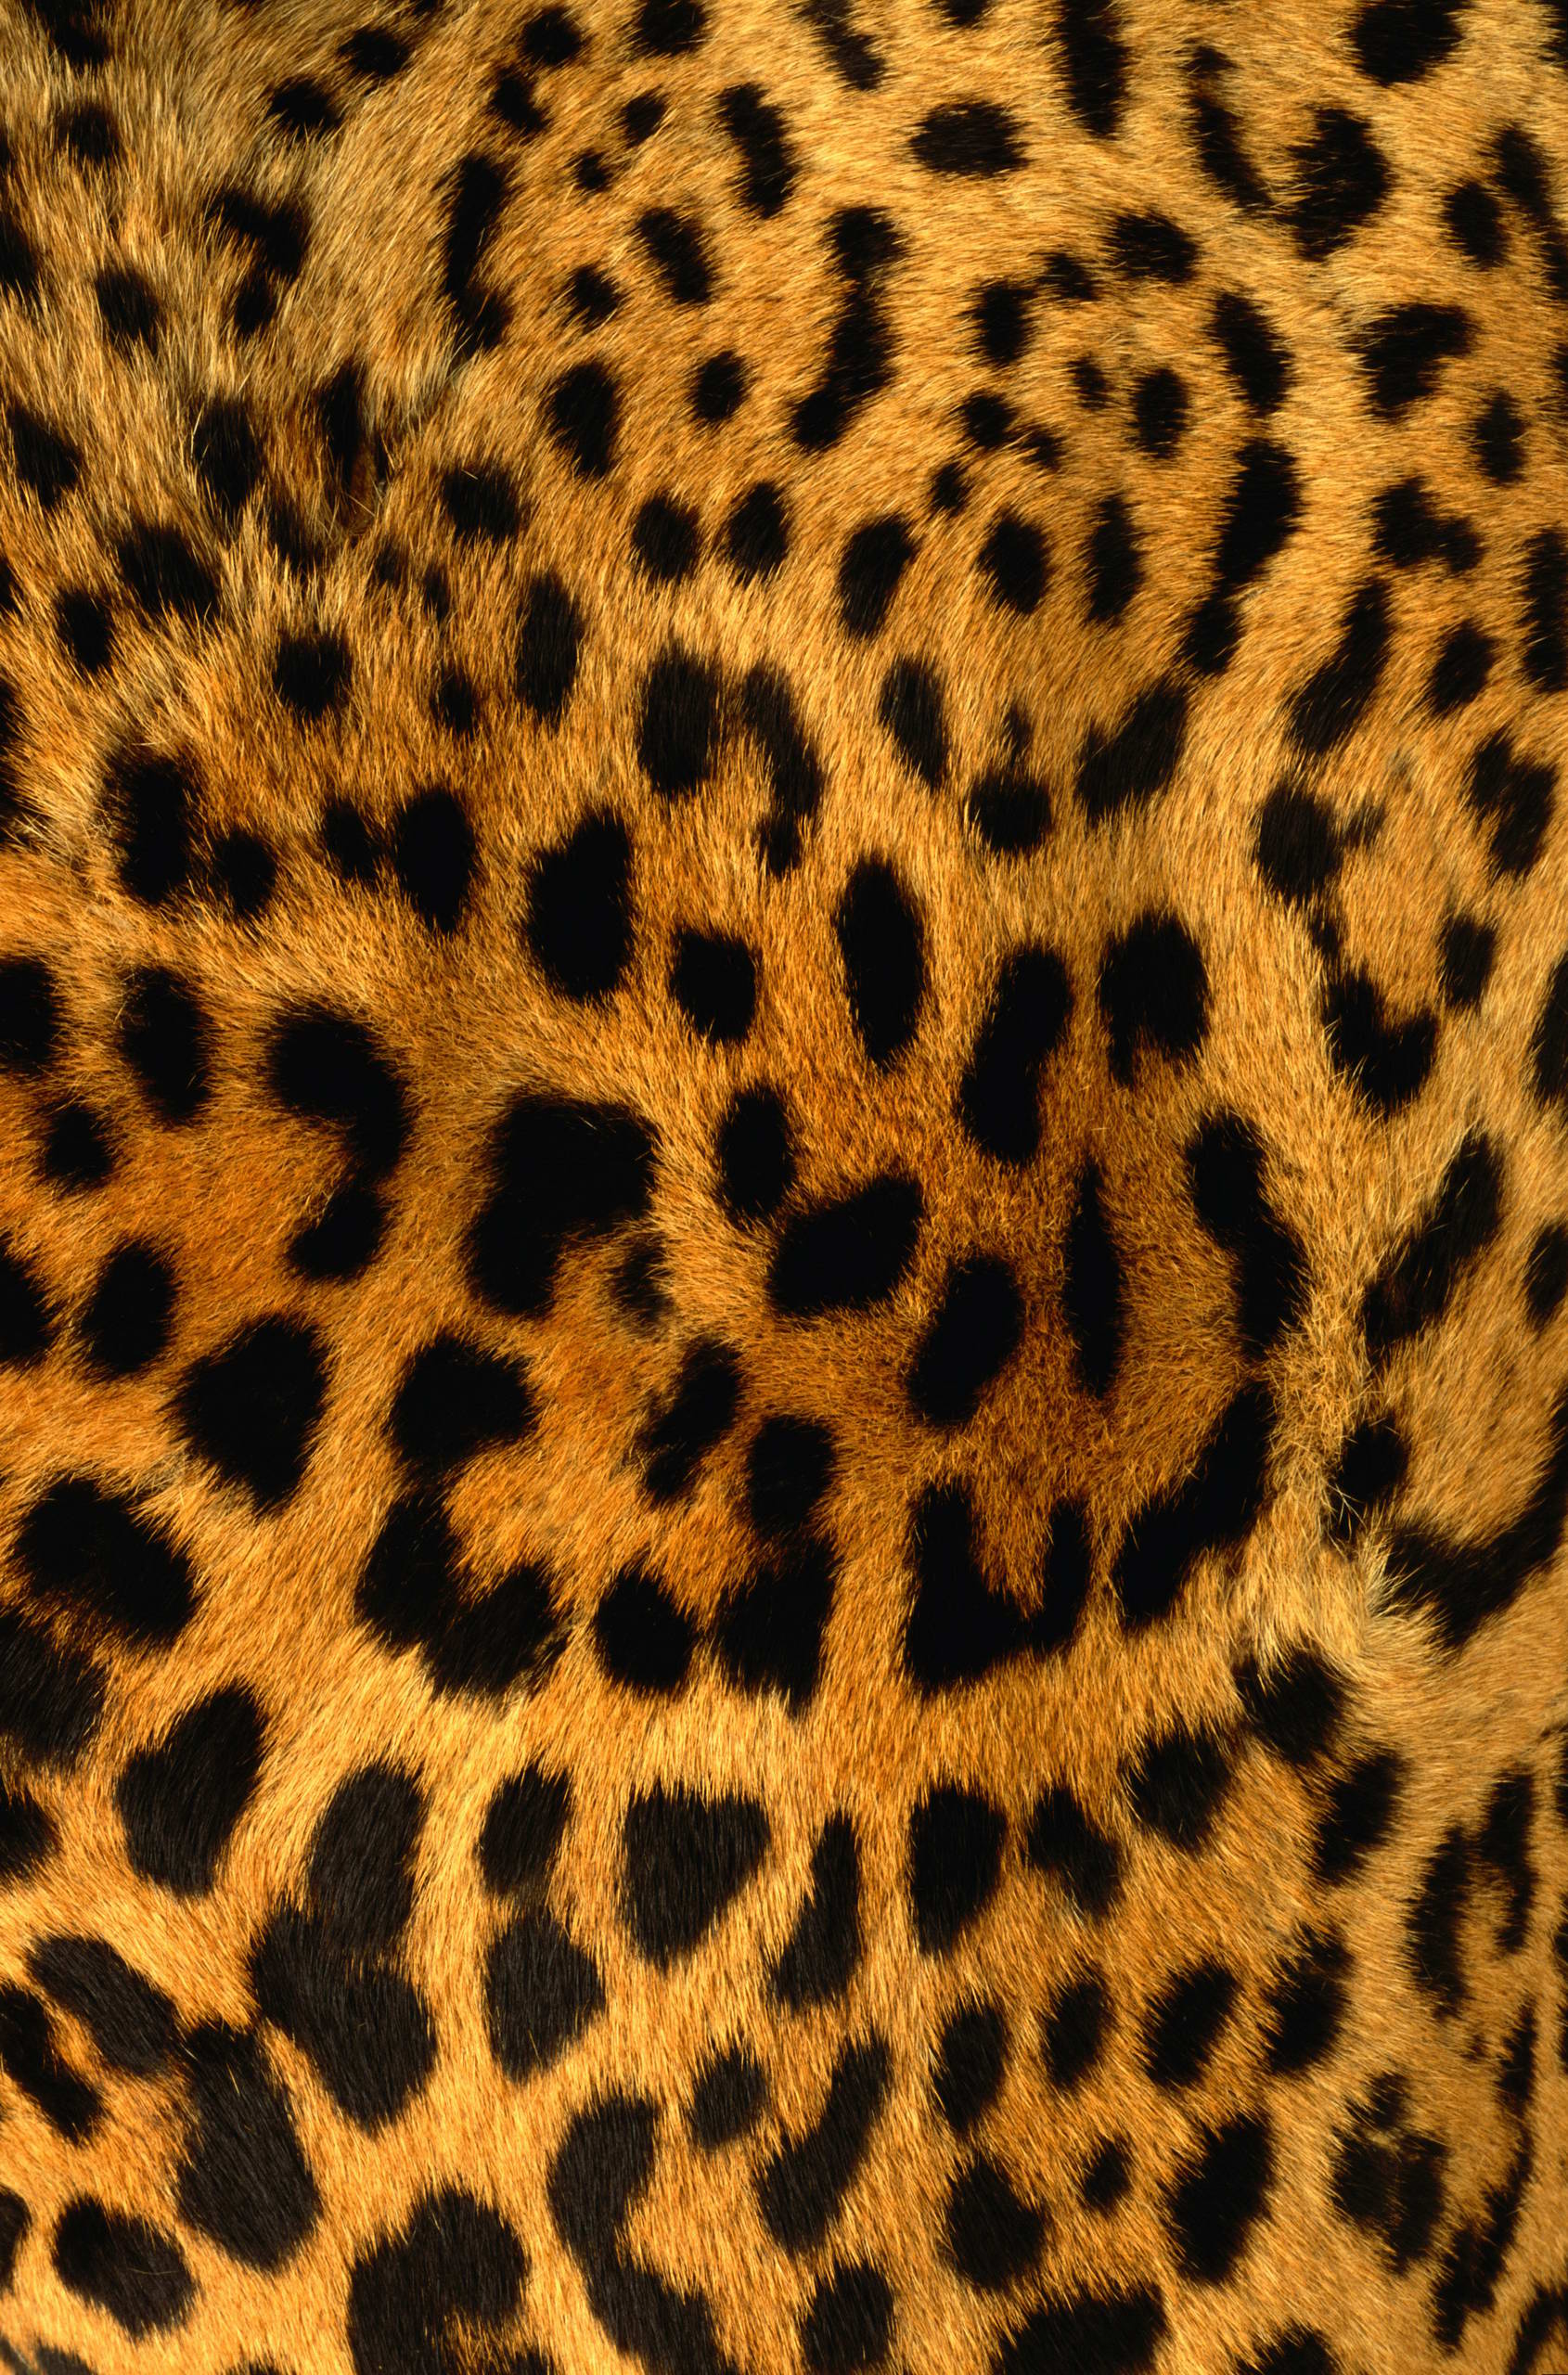 Leopard Skin Backgrounds on Wallpapers Vista